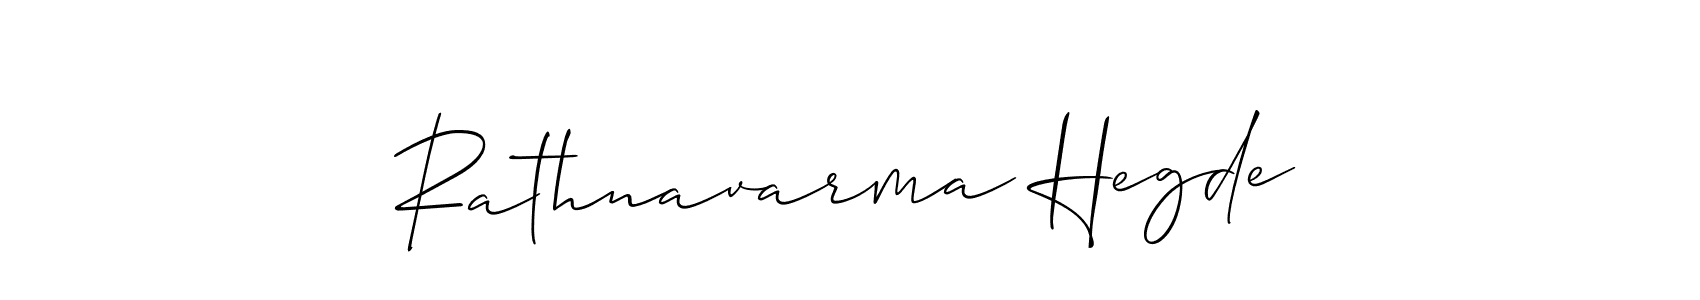 How to make Rathnavarma Hegde signature? Allison_Script is a professional autograph style. Create handwritten signature for Rathnavarma Hegde name. Rathnavarma Hegde signature style 2 images and pictures png